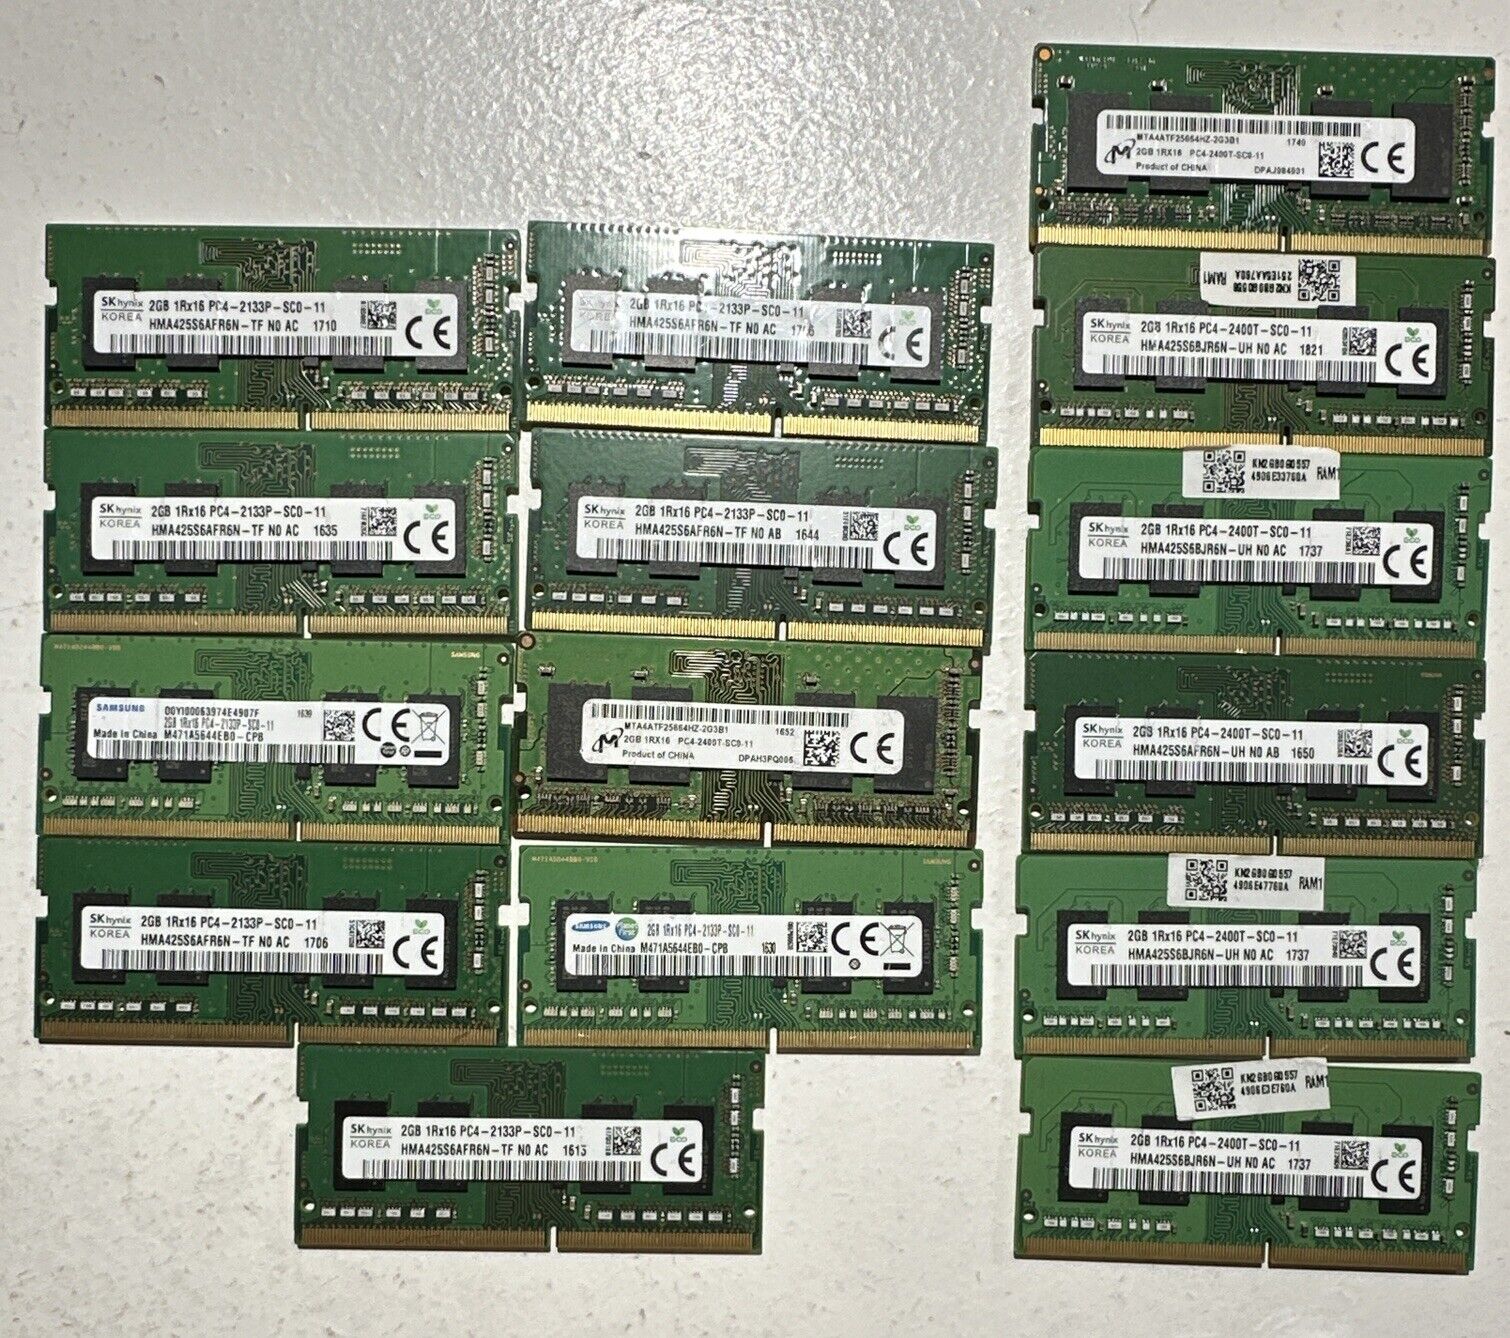 Lot of 15 2GB 1Rx16 PC4-2133/2400 DDR4 Laptop Ram Memory SK hynix/Micron/Samsung